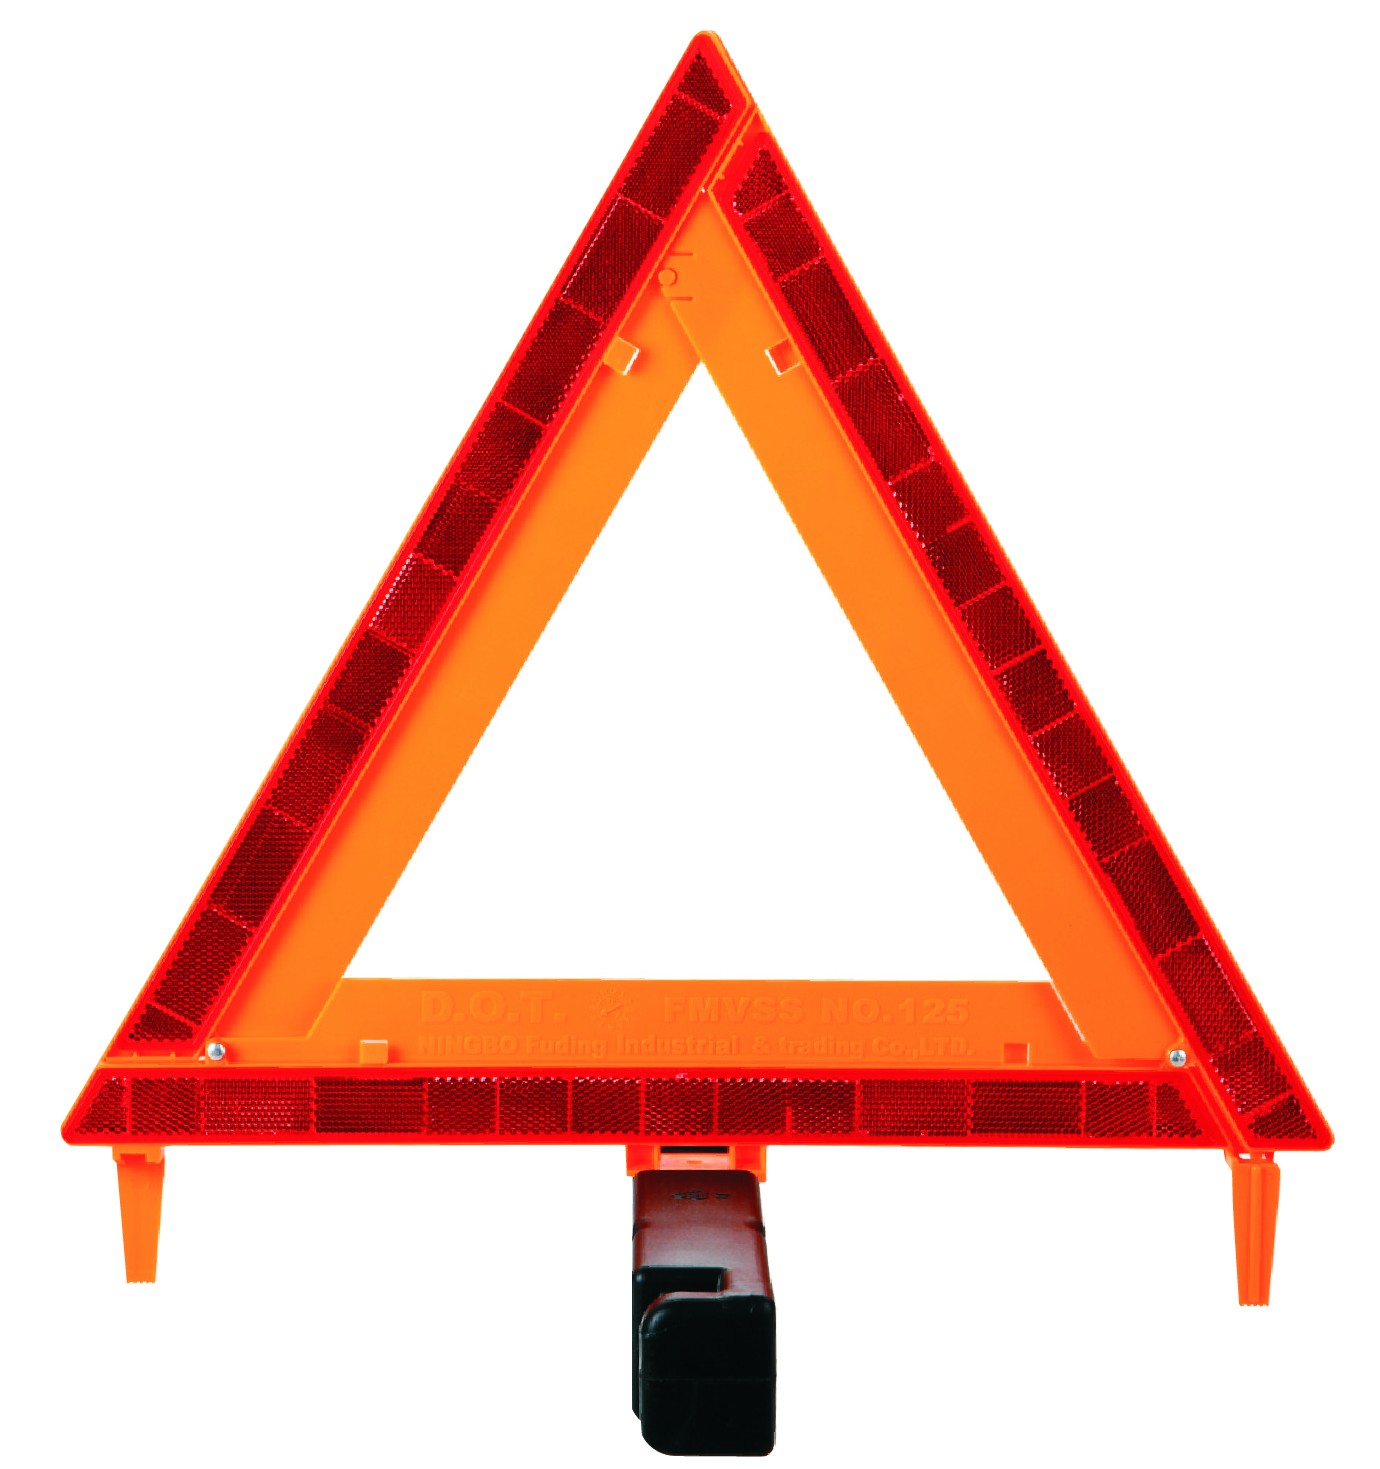 DOT warning triangle